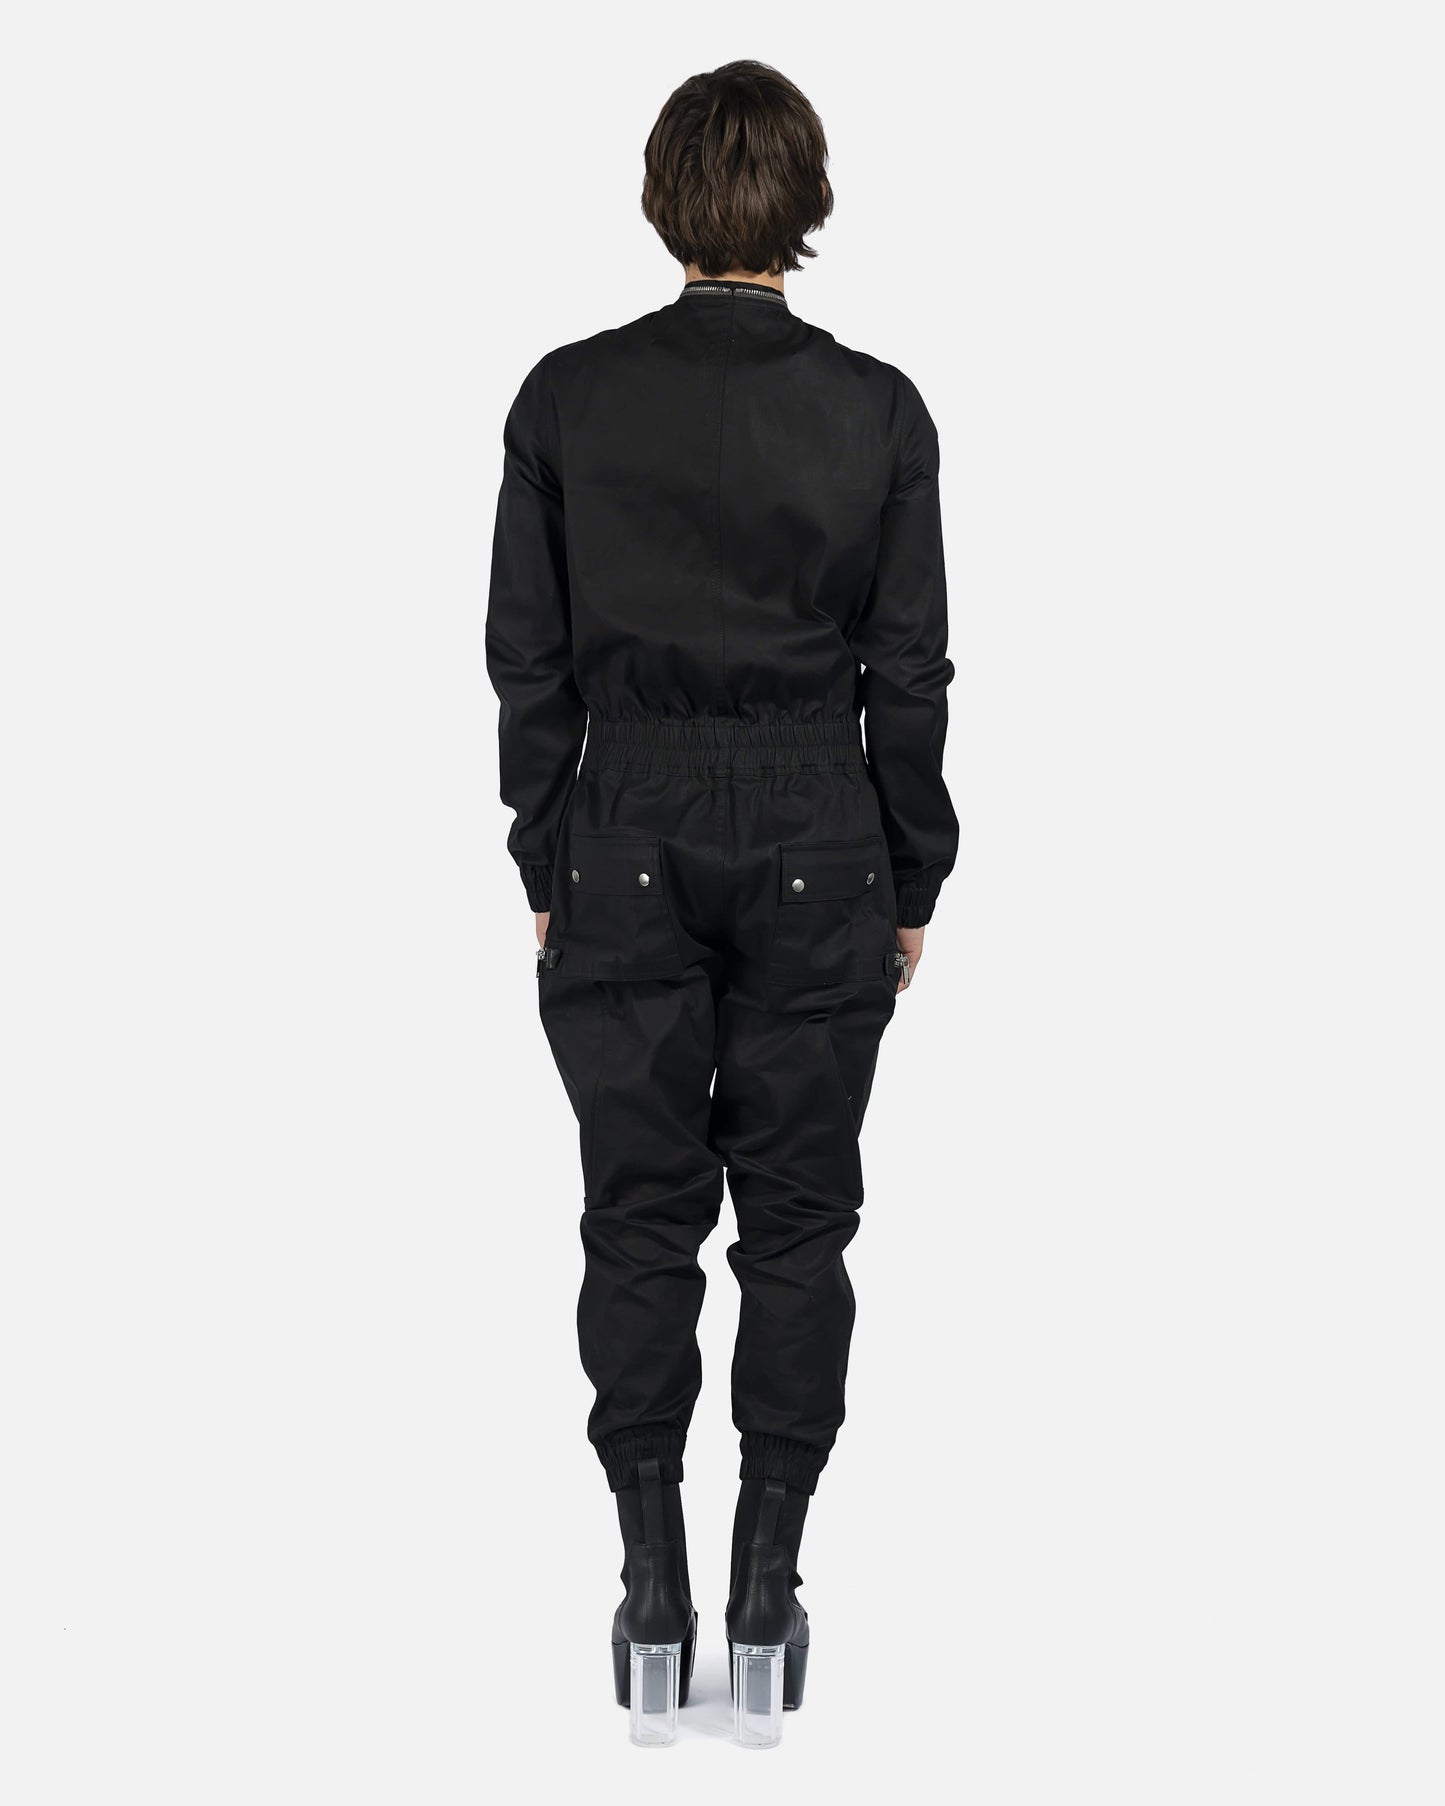 Rick Owens Men's Pants Bauhaus Larry Flightsuit in Black